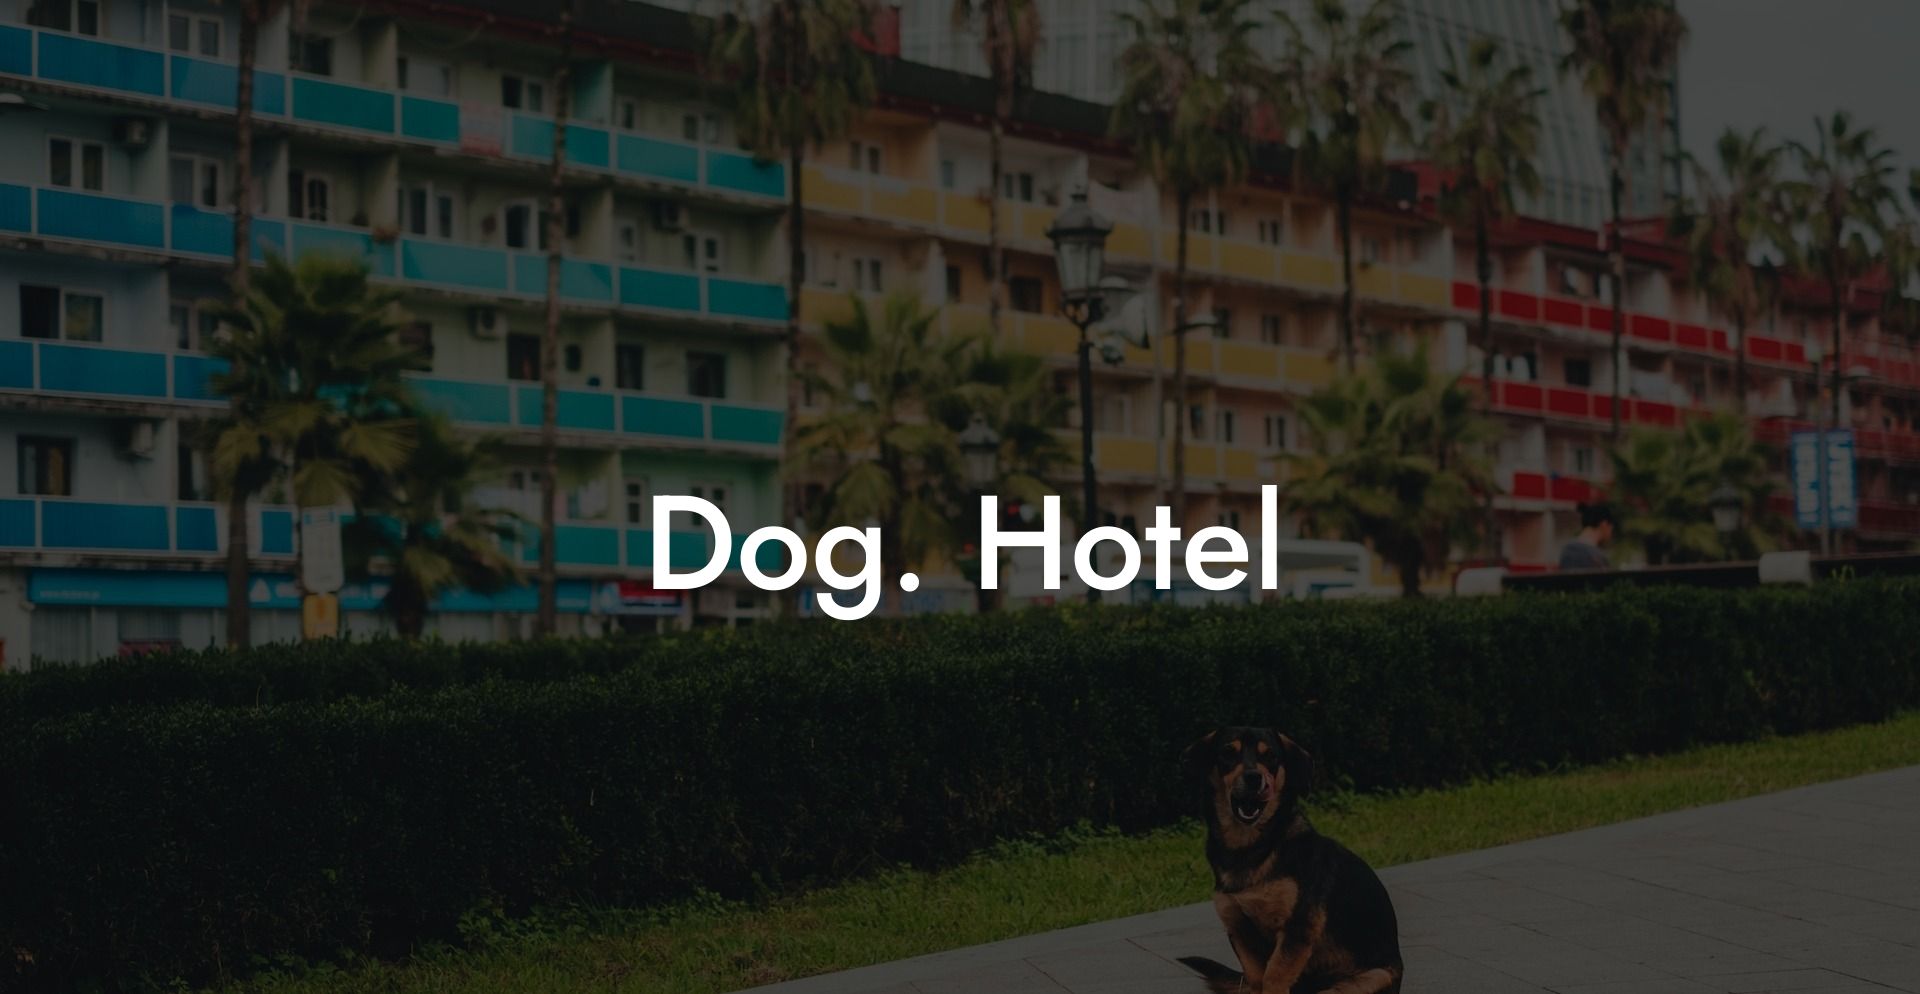 Dog. Hotel